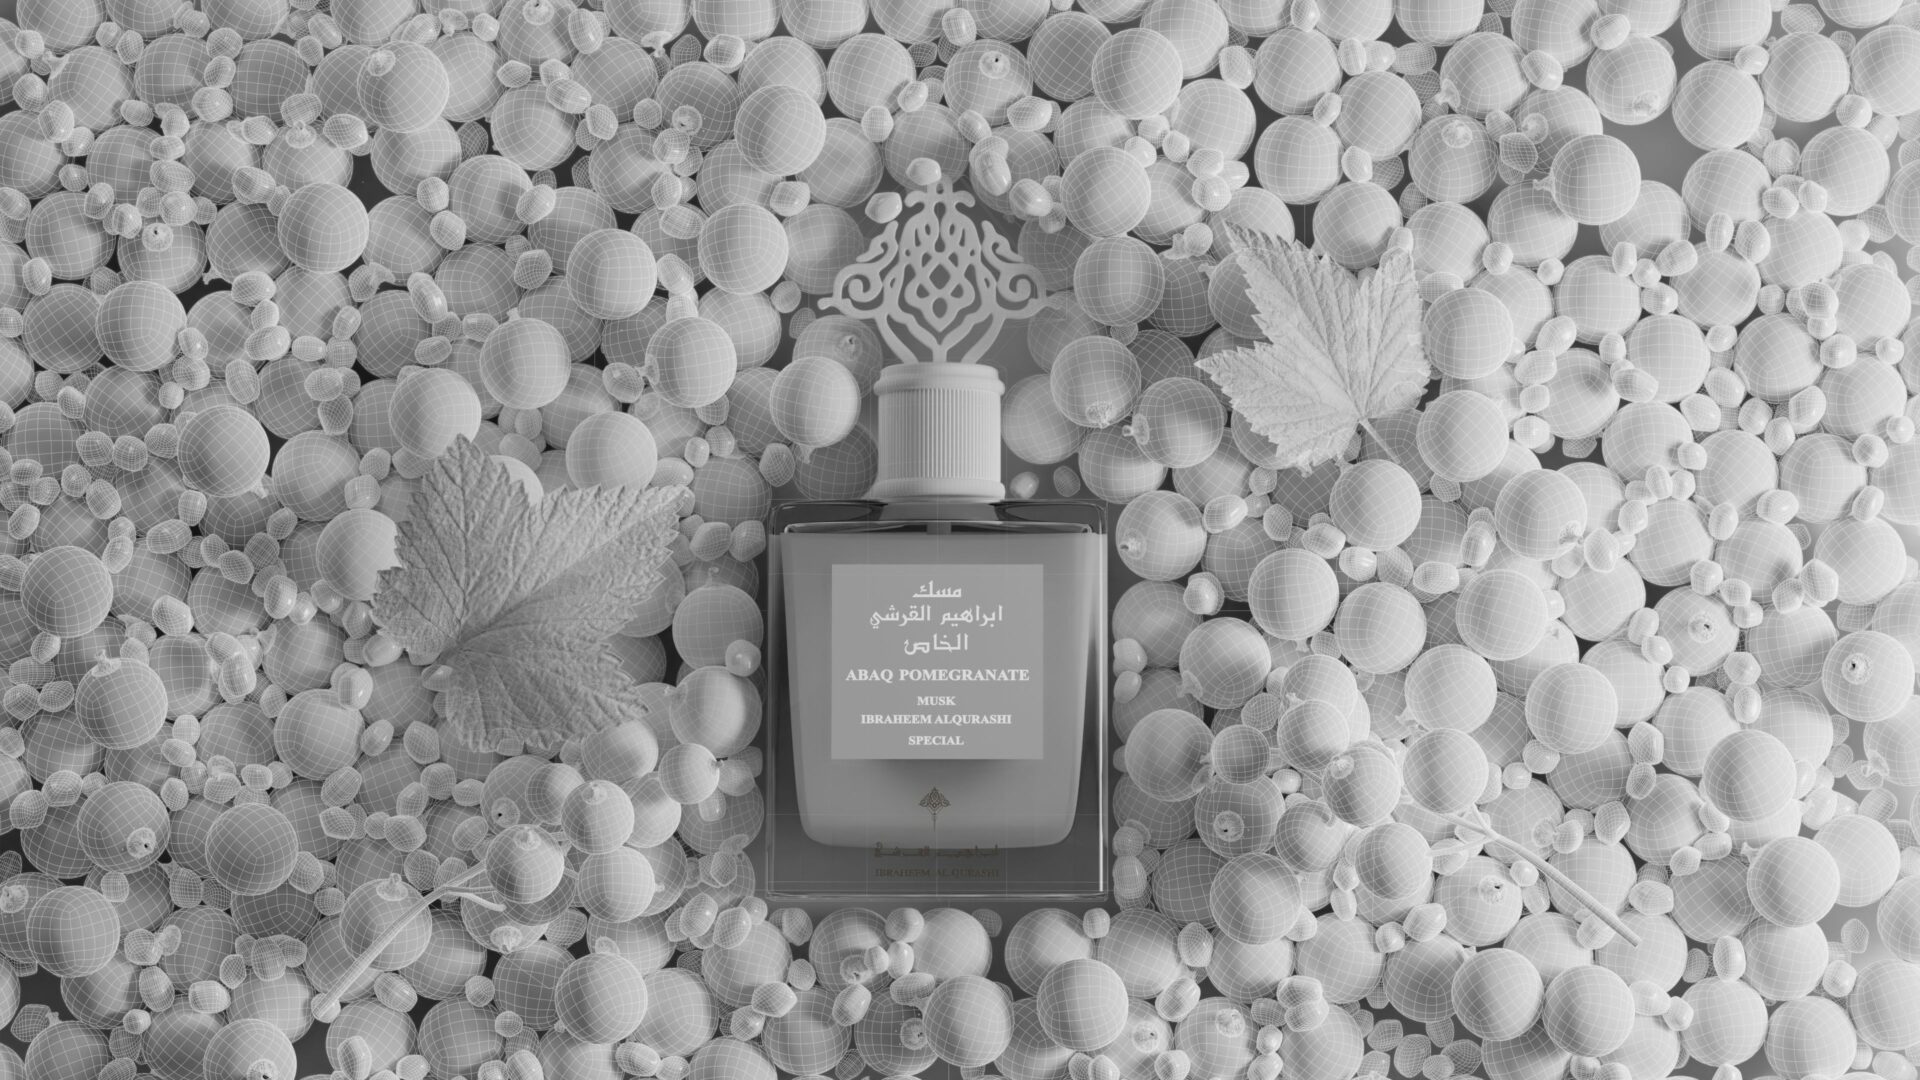 Perfume advertising photo on Behance  Perfume, Fragrance photography,  Perfume photography